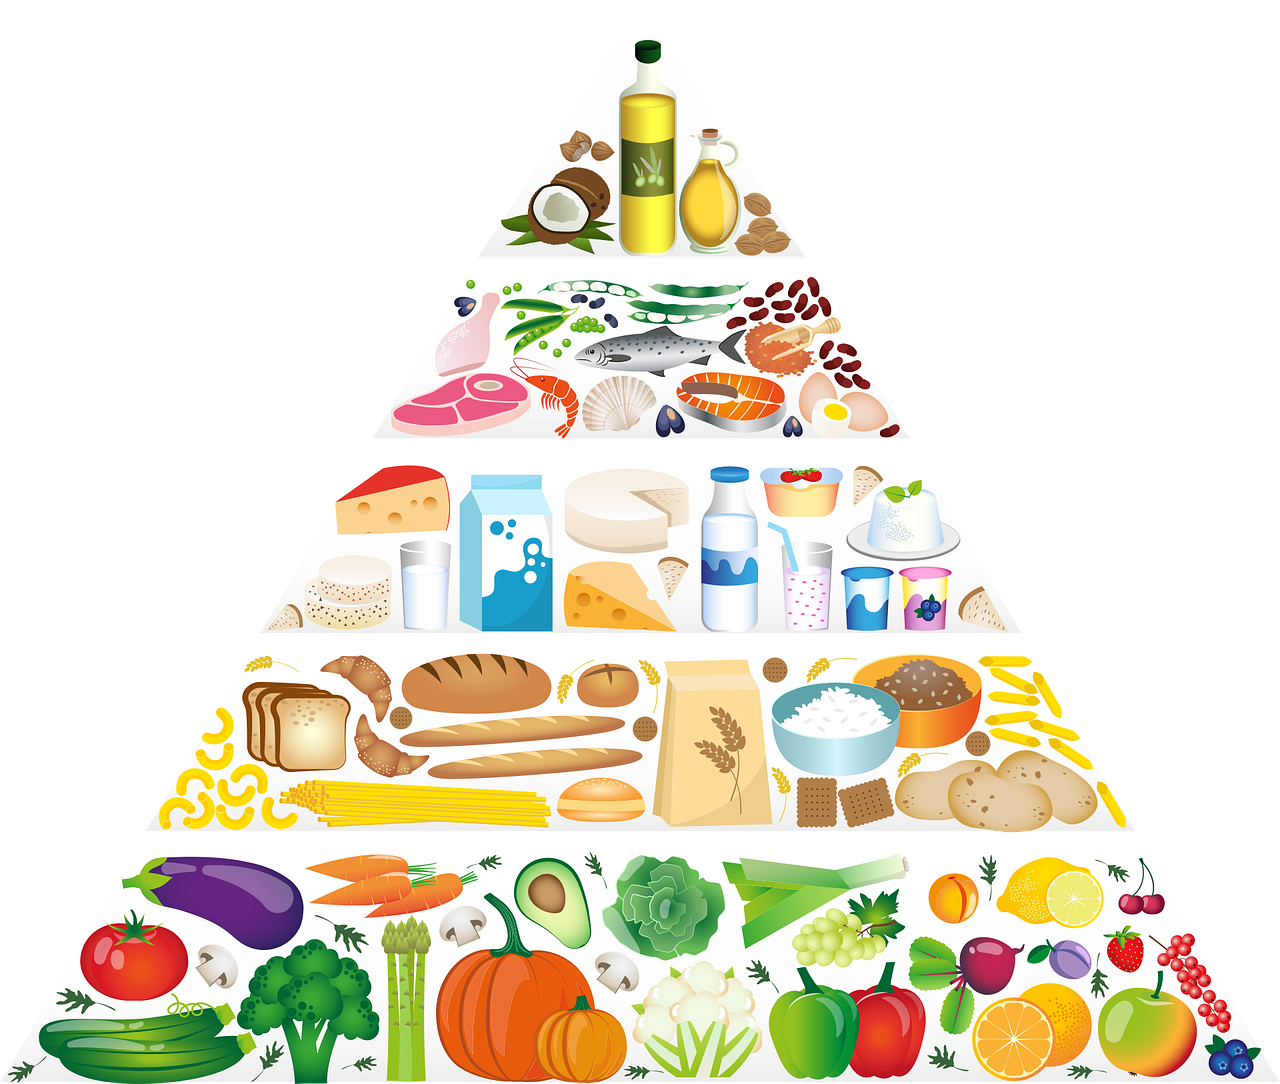 food pyramid, eating pyramid, nutrition